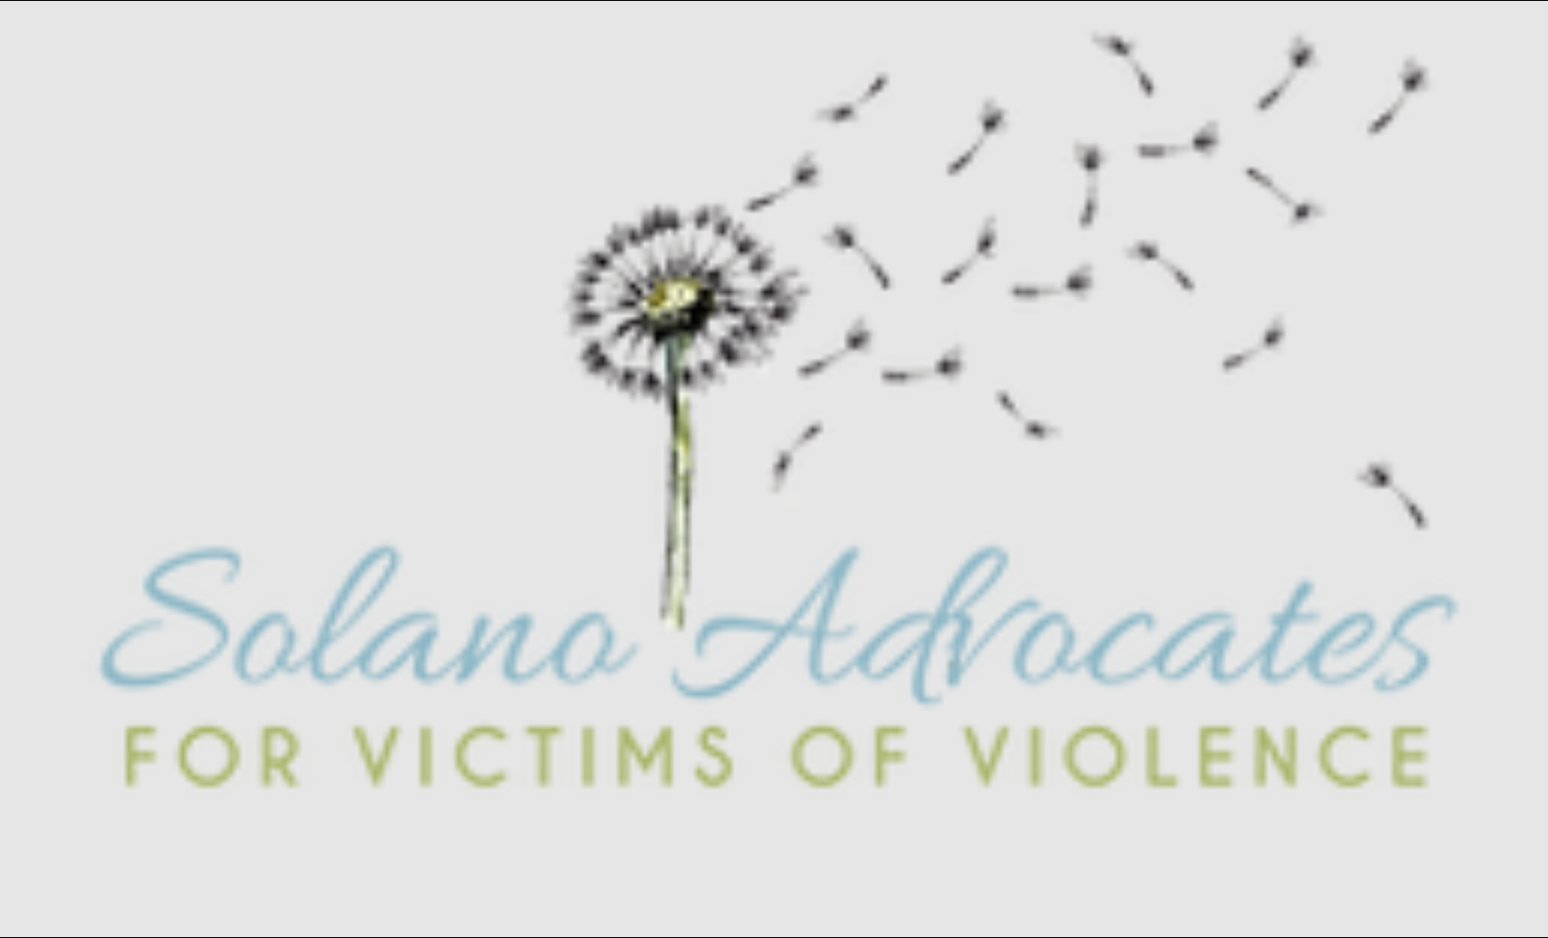 Solano Advocates for Victims of Violence